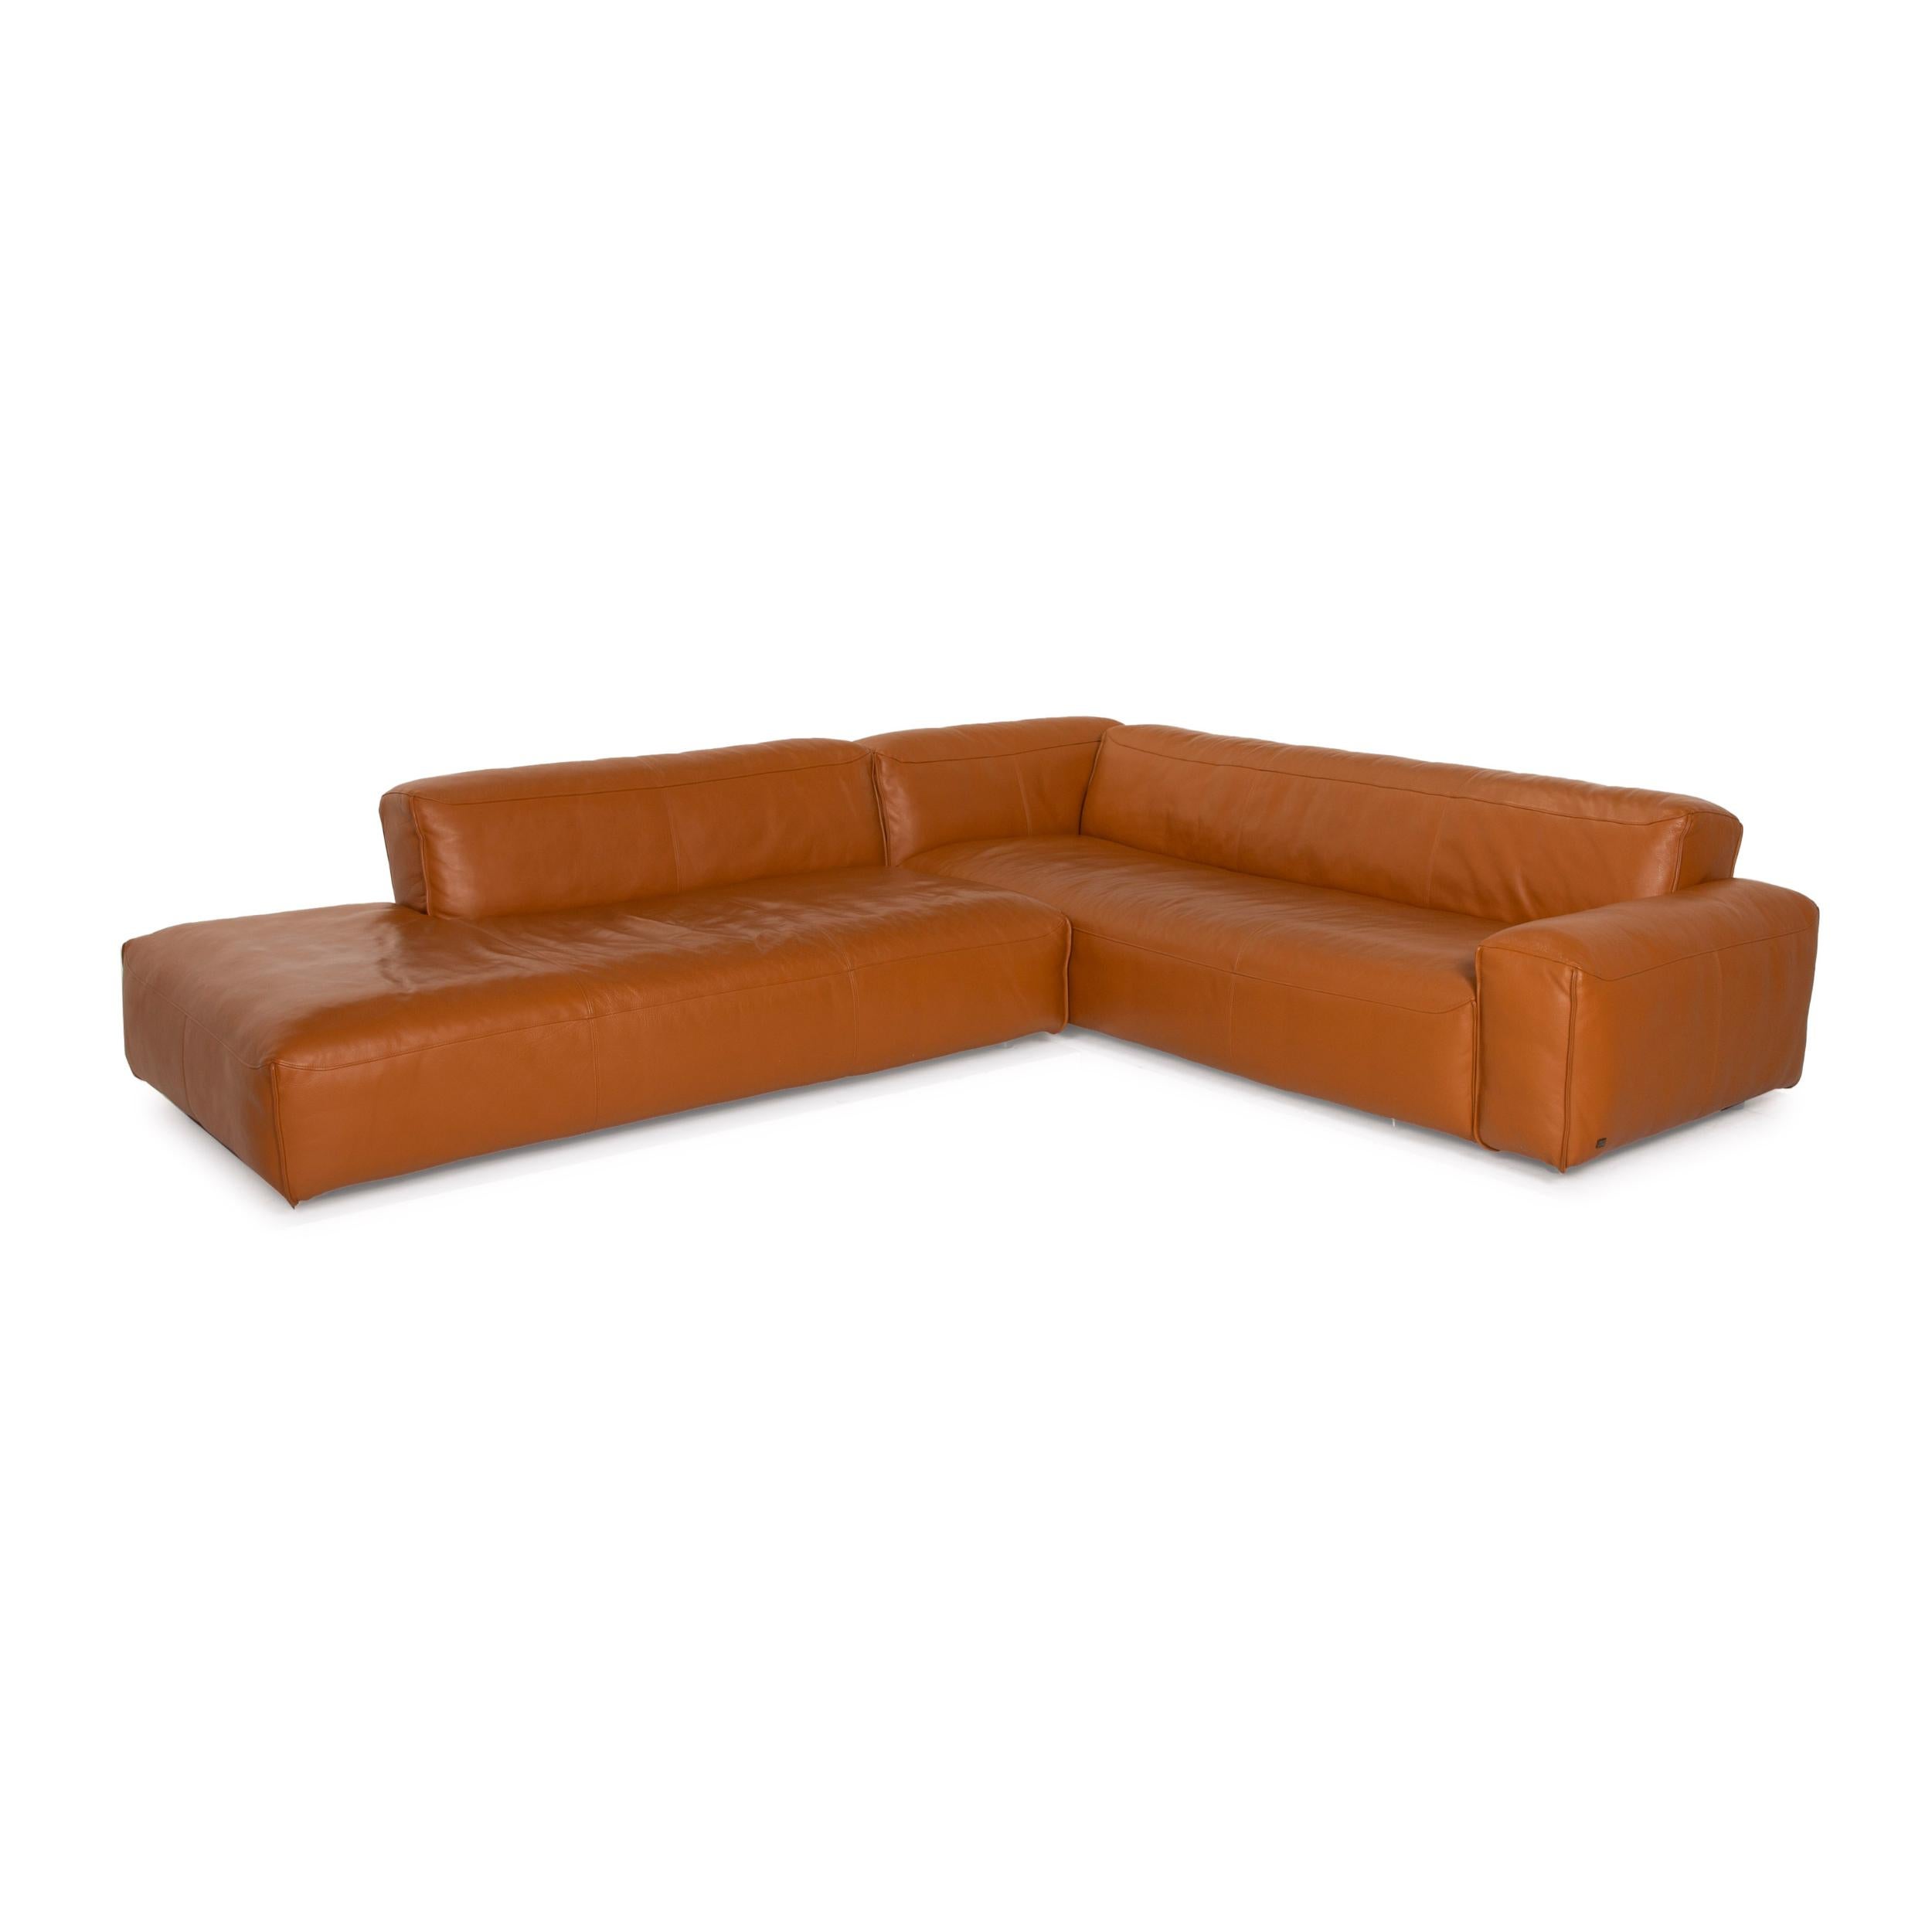 Leather Rolf Benz Mio leather sofa cognac corner sofa For Sale